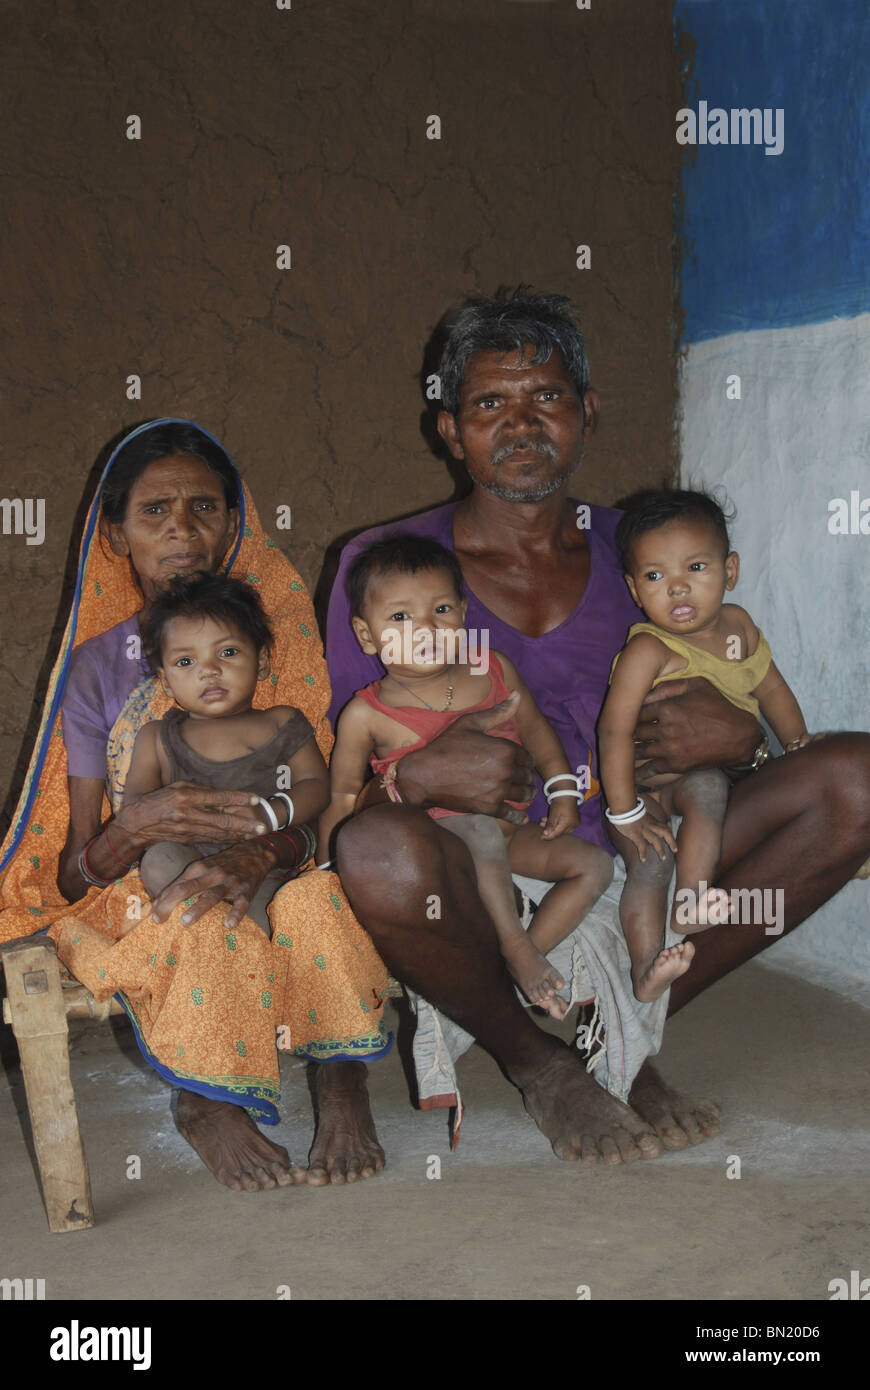 ganga, jamuna, saraswati, - triplets born on 5th June with grandparents, Madhya Pradesh Stock Photo